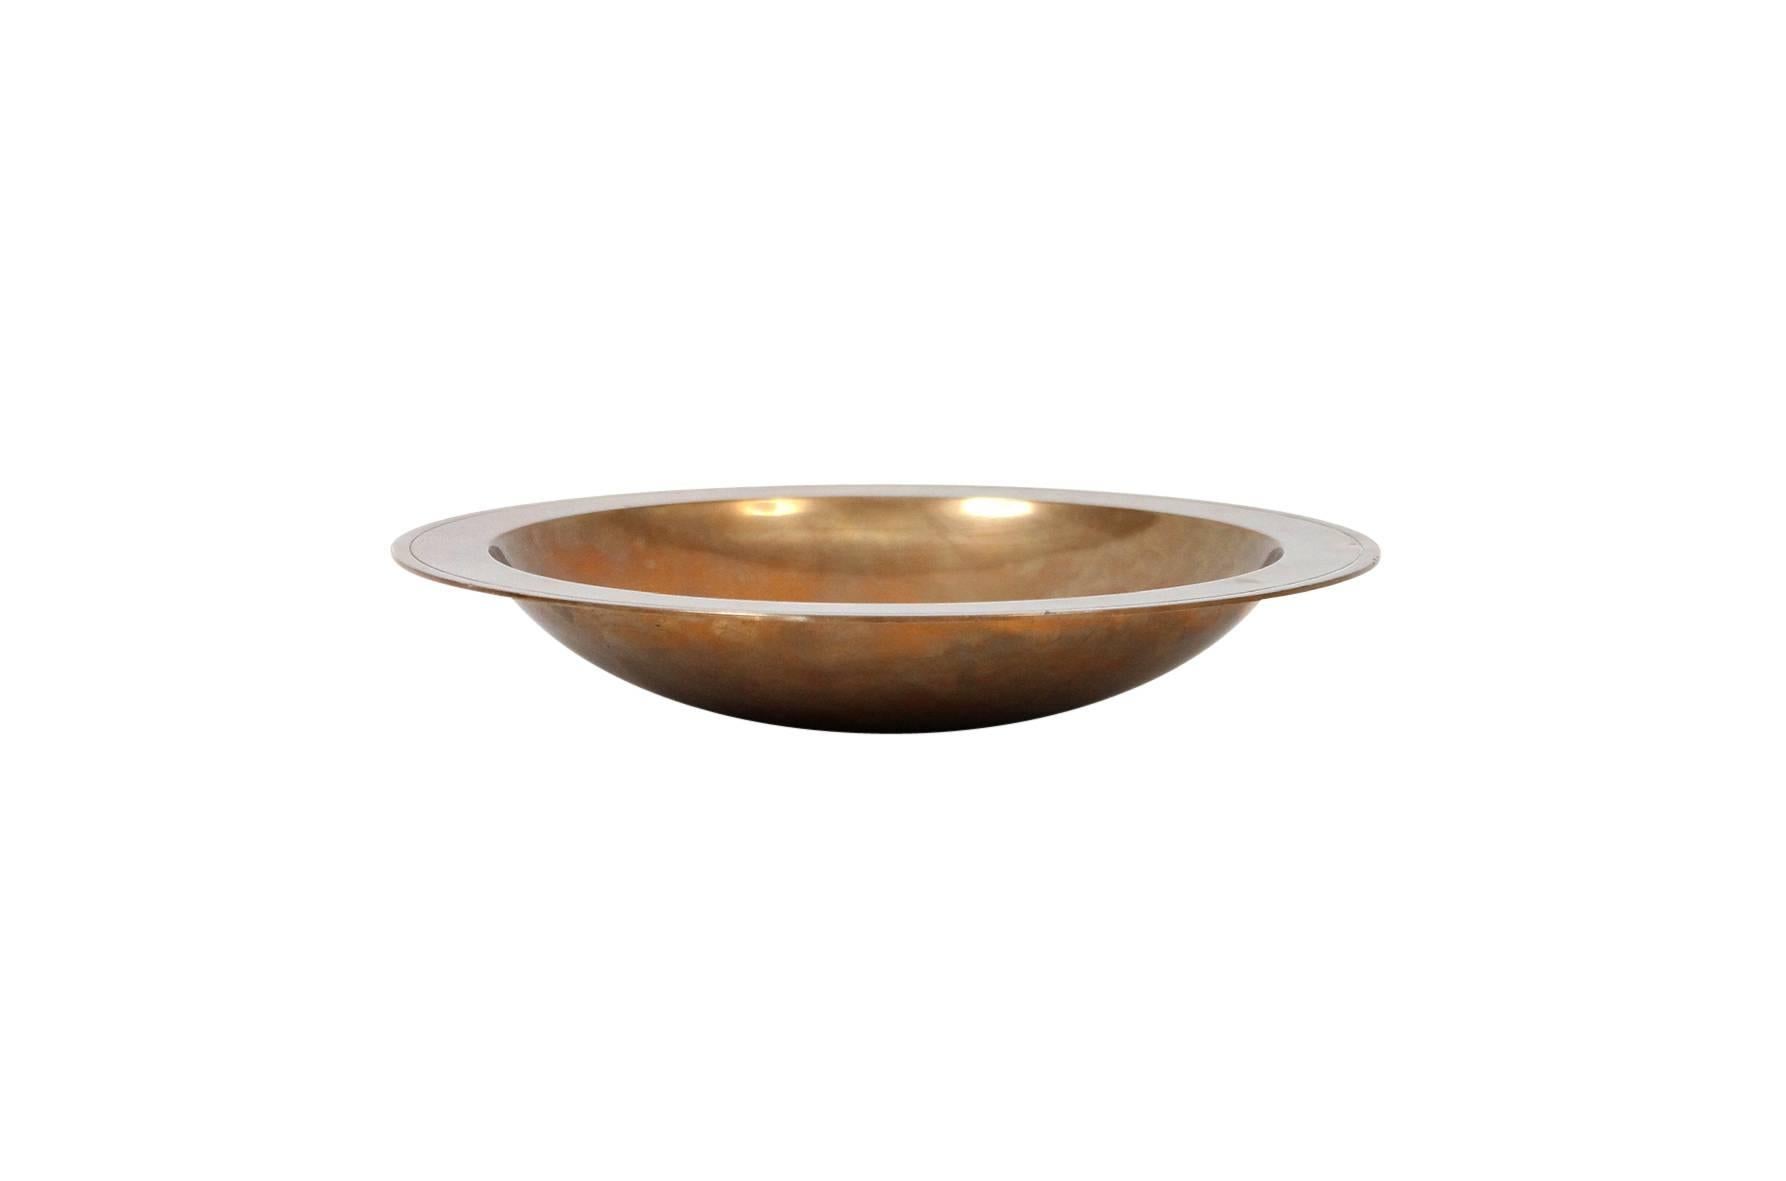 Decorative bronze bowl by Tiffany & Co. Elegant timeless design. Marked 